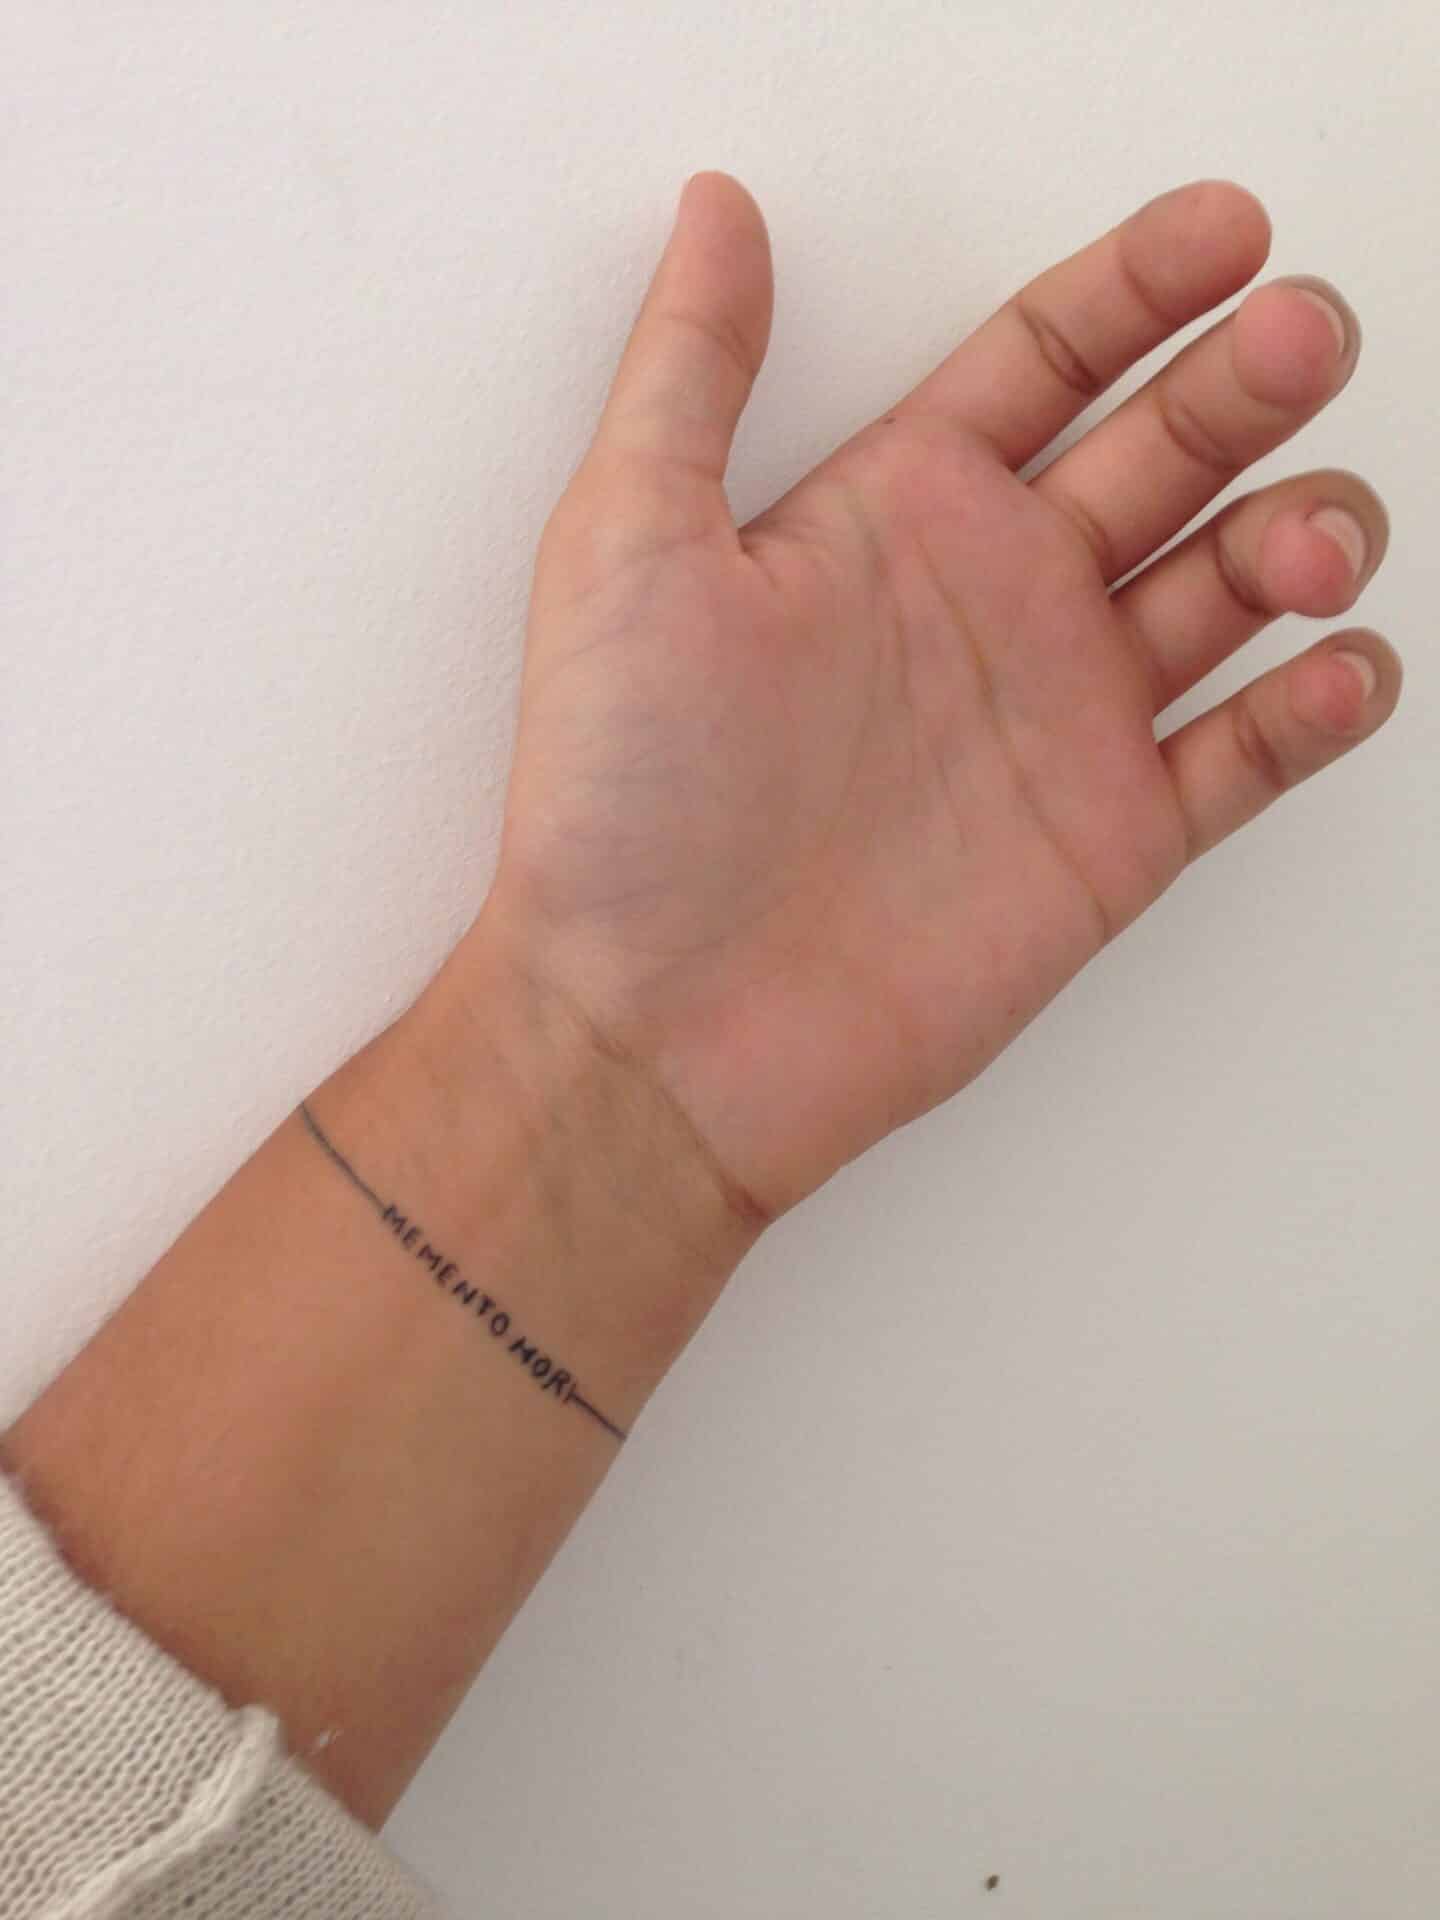 Wrist memento Mori tattoo